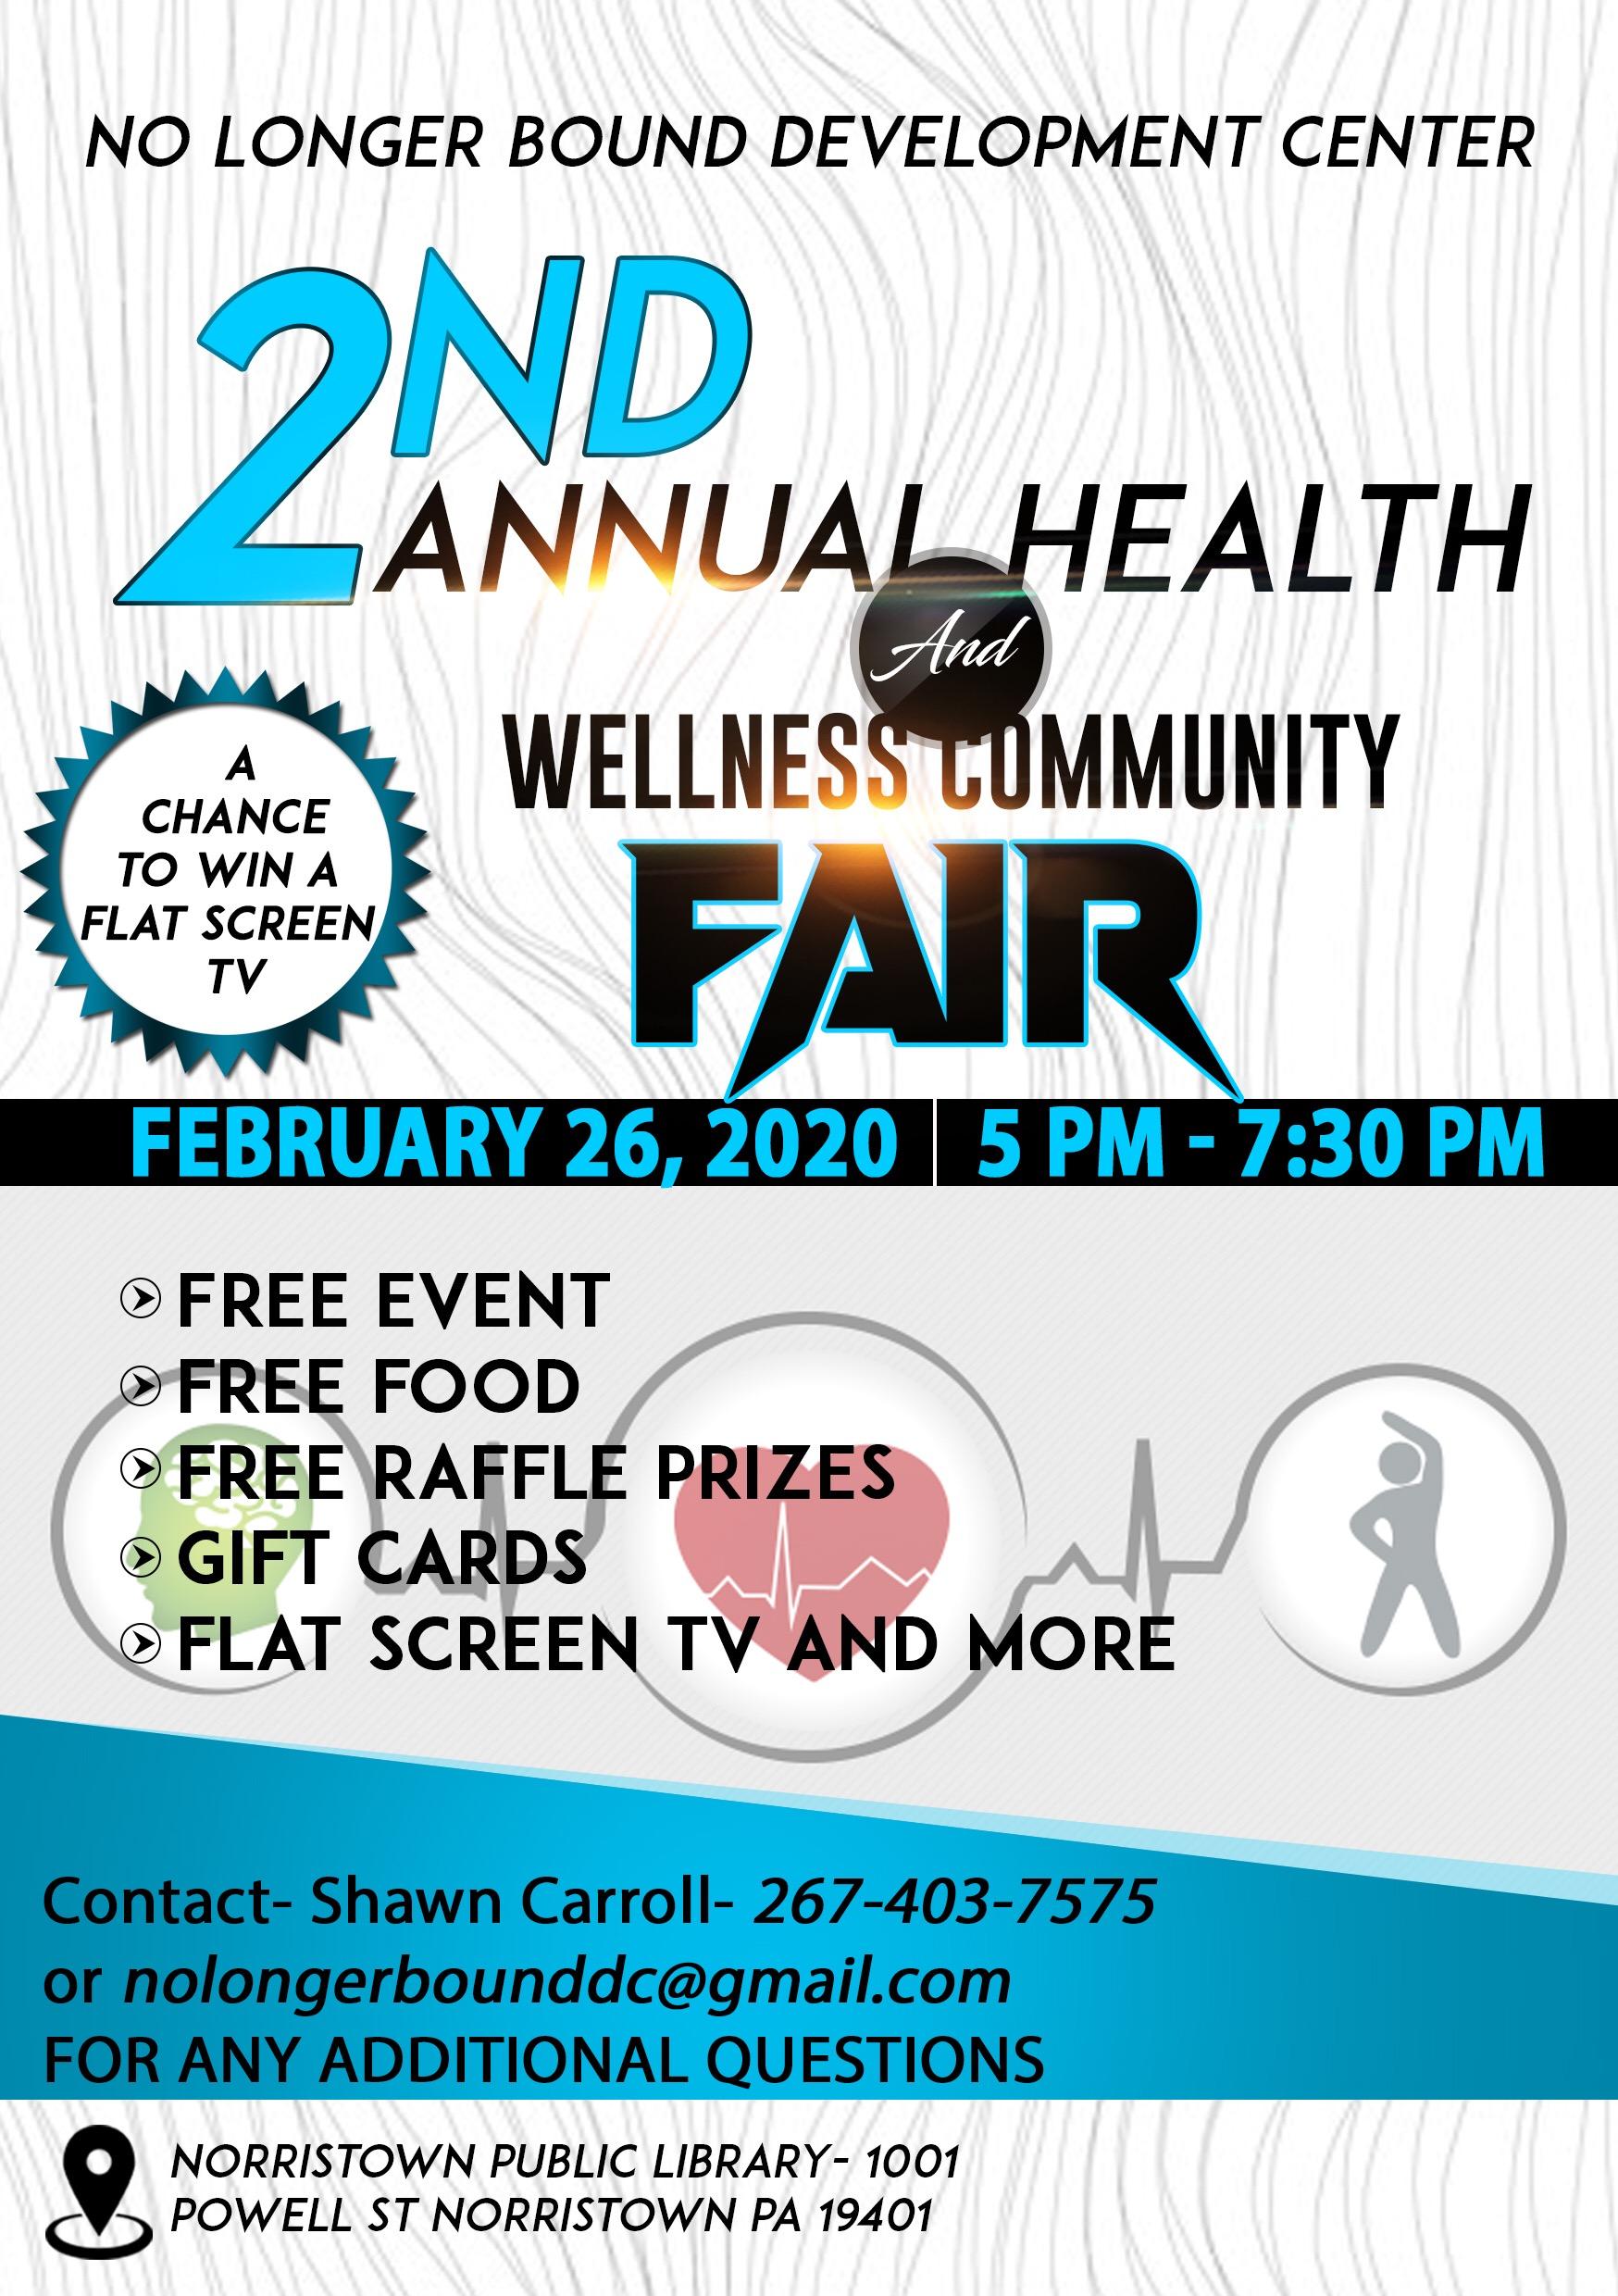 NLBDC Present's the 2nd Annual Health & Wellness Community Fair